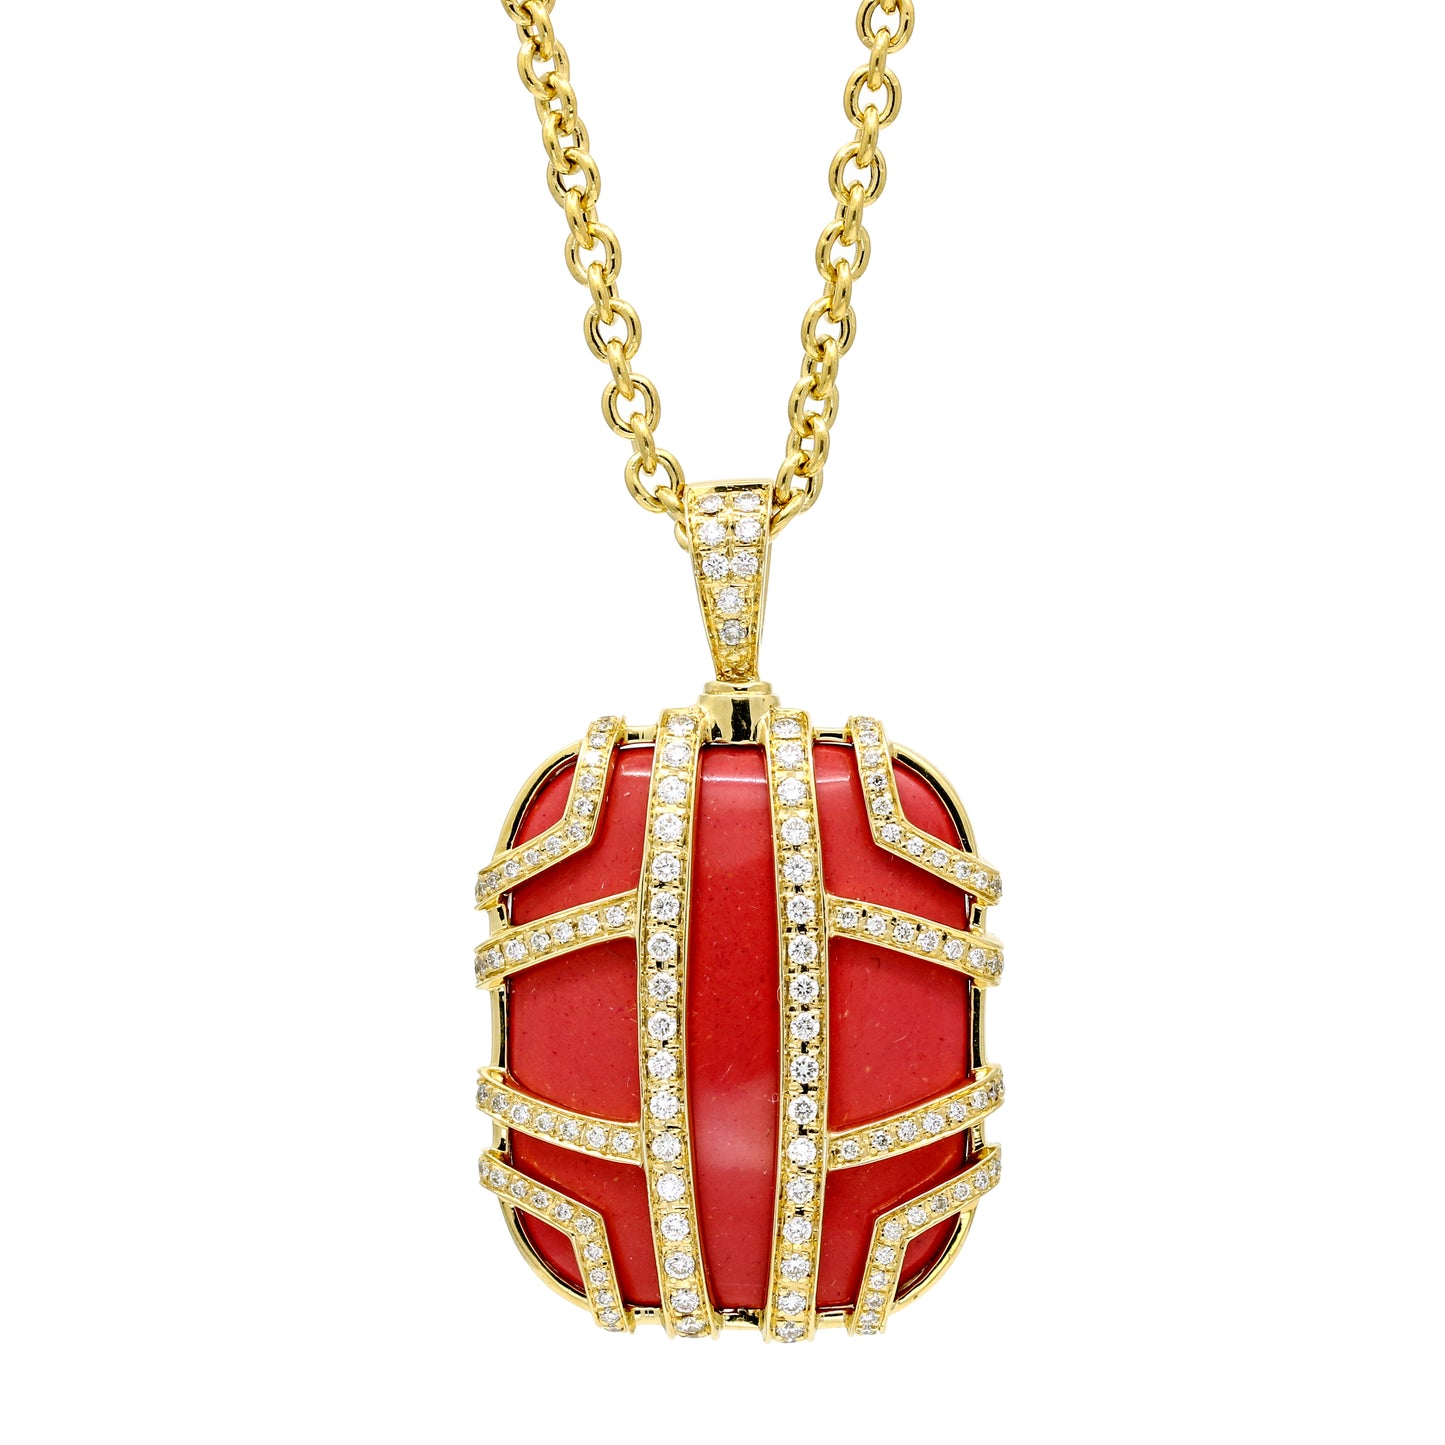 Di Modolo Favola Red Coral and Diamond Pendant Necklace in 18K Yellow Gold